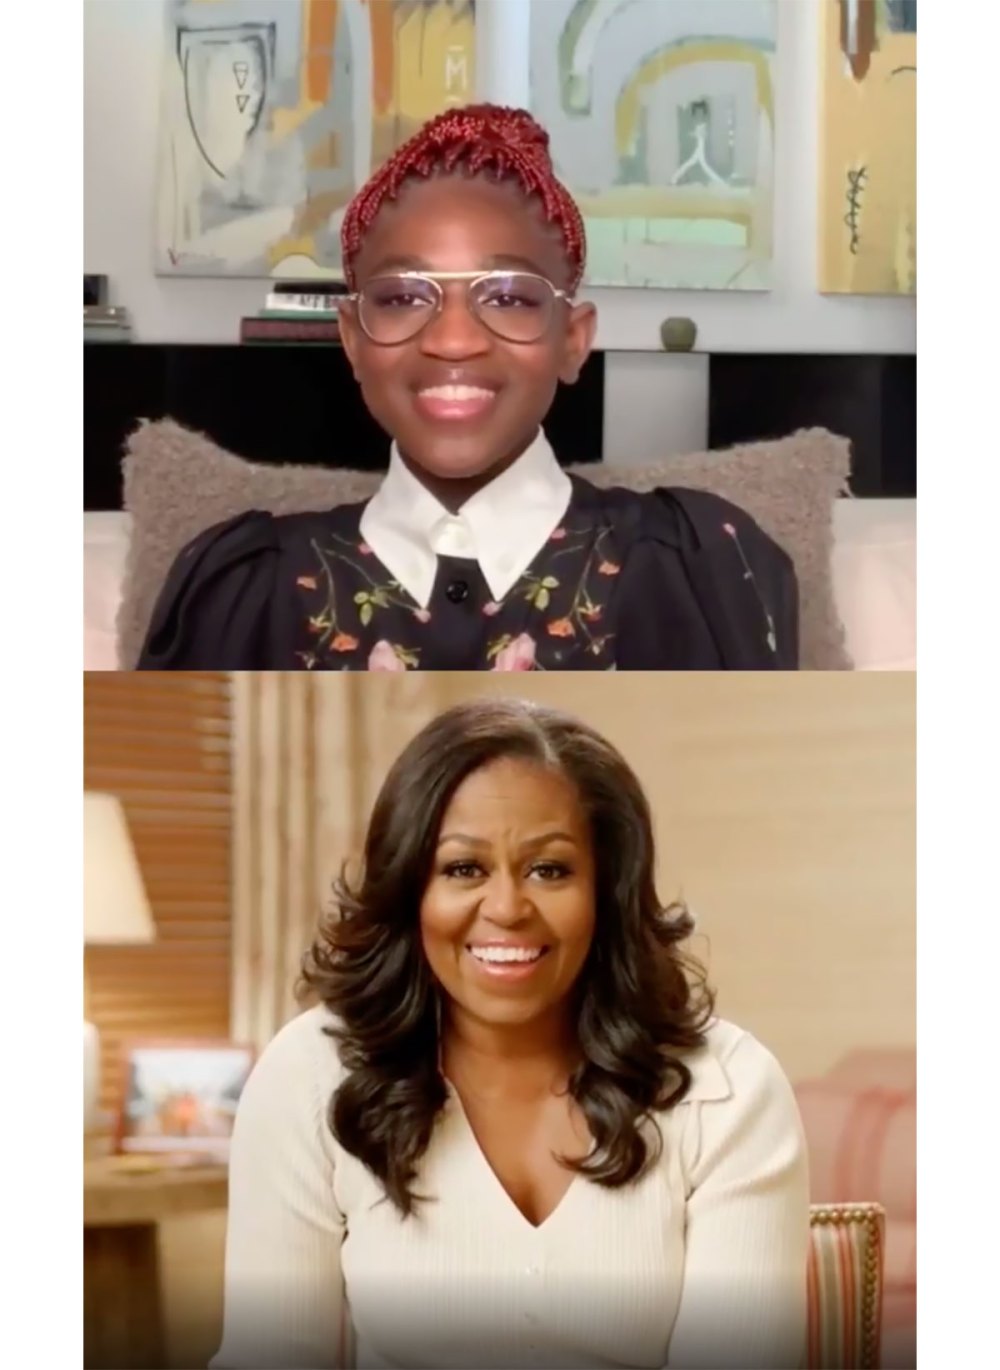 Dwyane Wade’s Daughter Zaya Asks ‘Idol’ Michelle Obama for Advice on Self-Acceptance